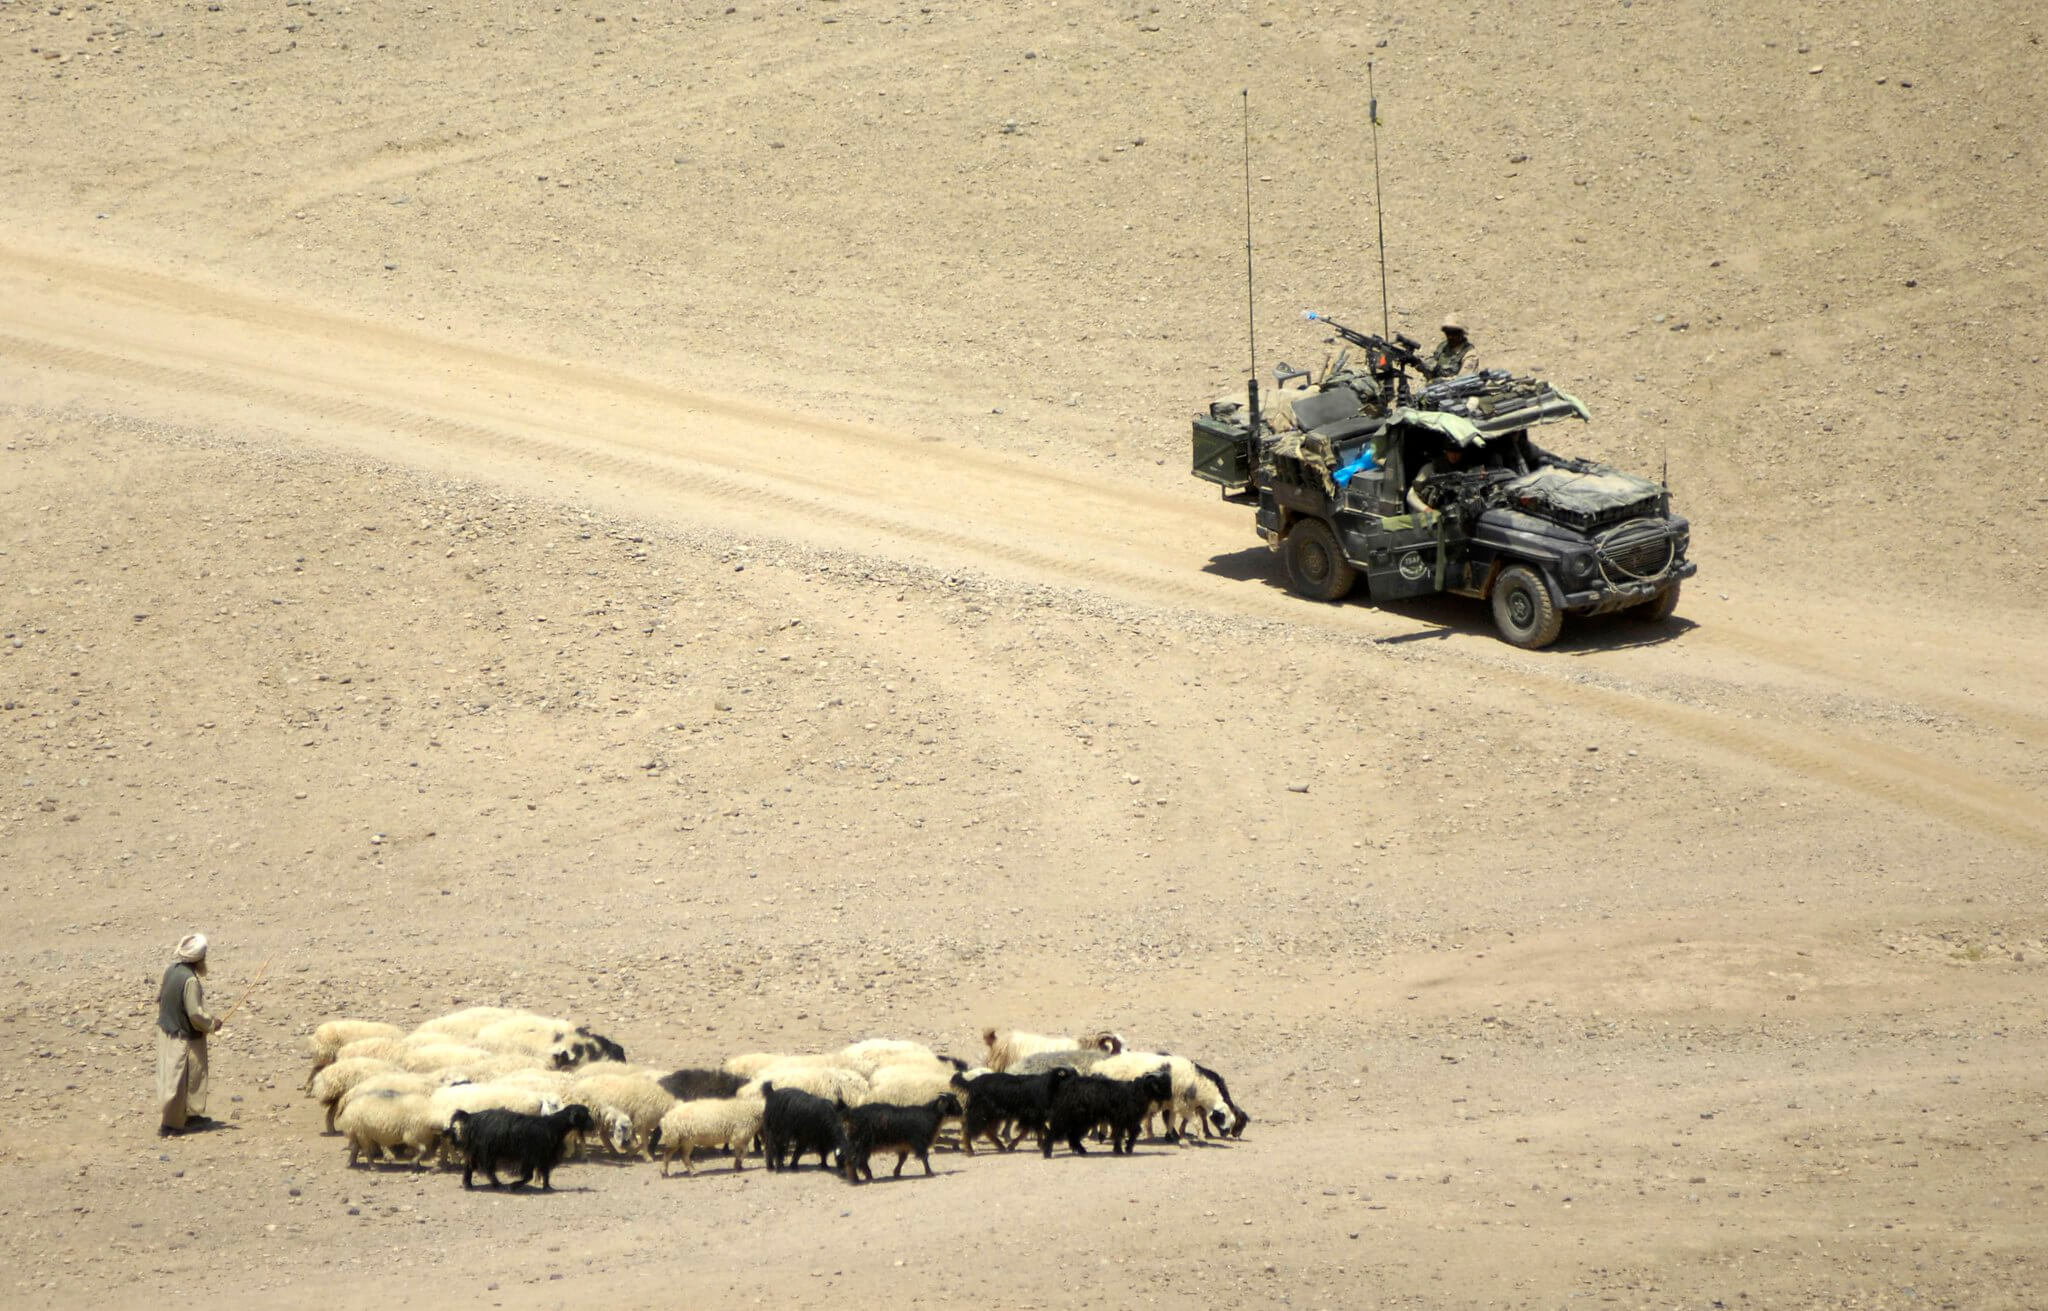 Kamminga - Nederlandse militairen van de Task Force Uruzgan in Afghanistan in 2008. ResoluteSupportMedia - Flickr